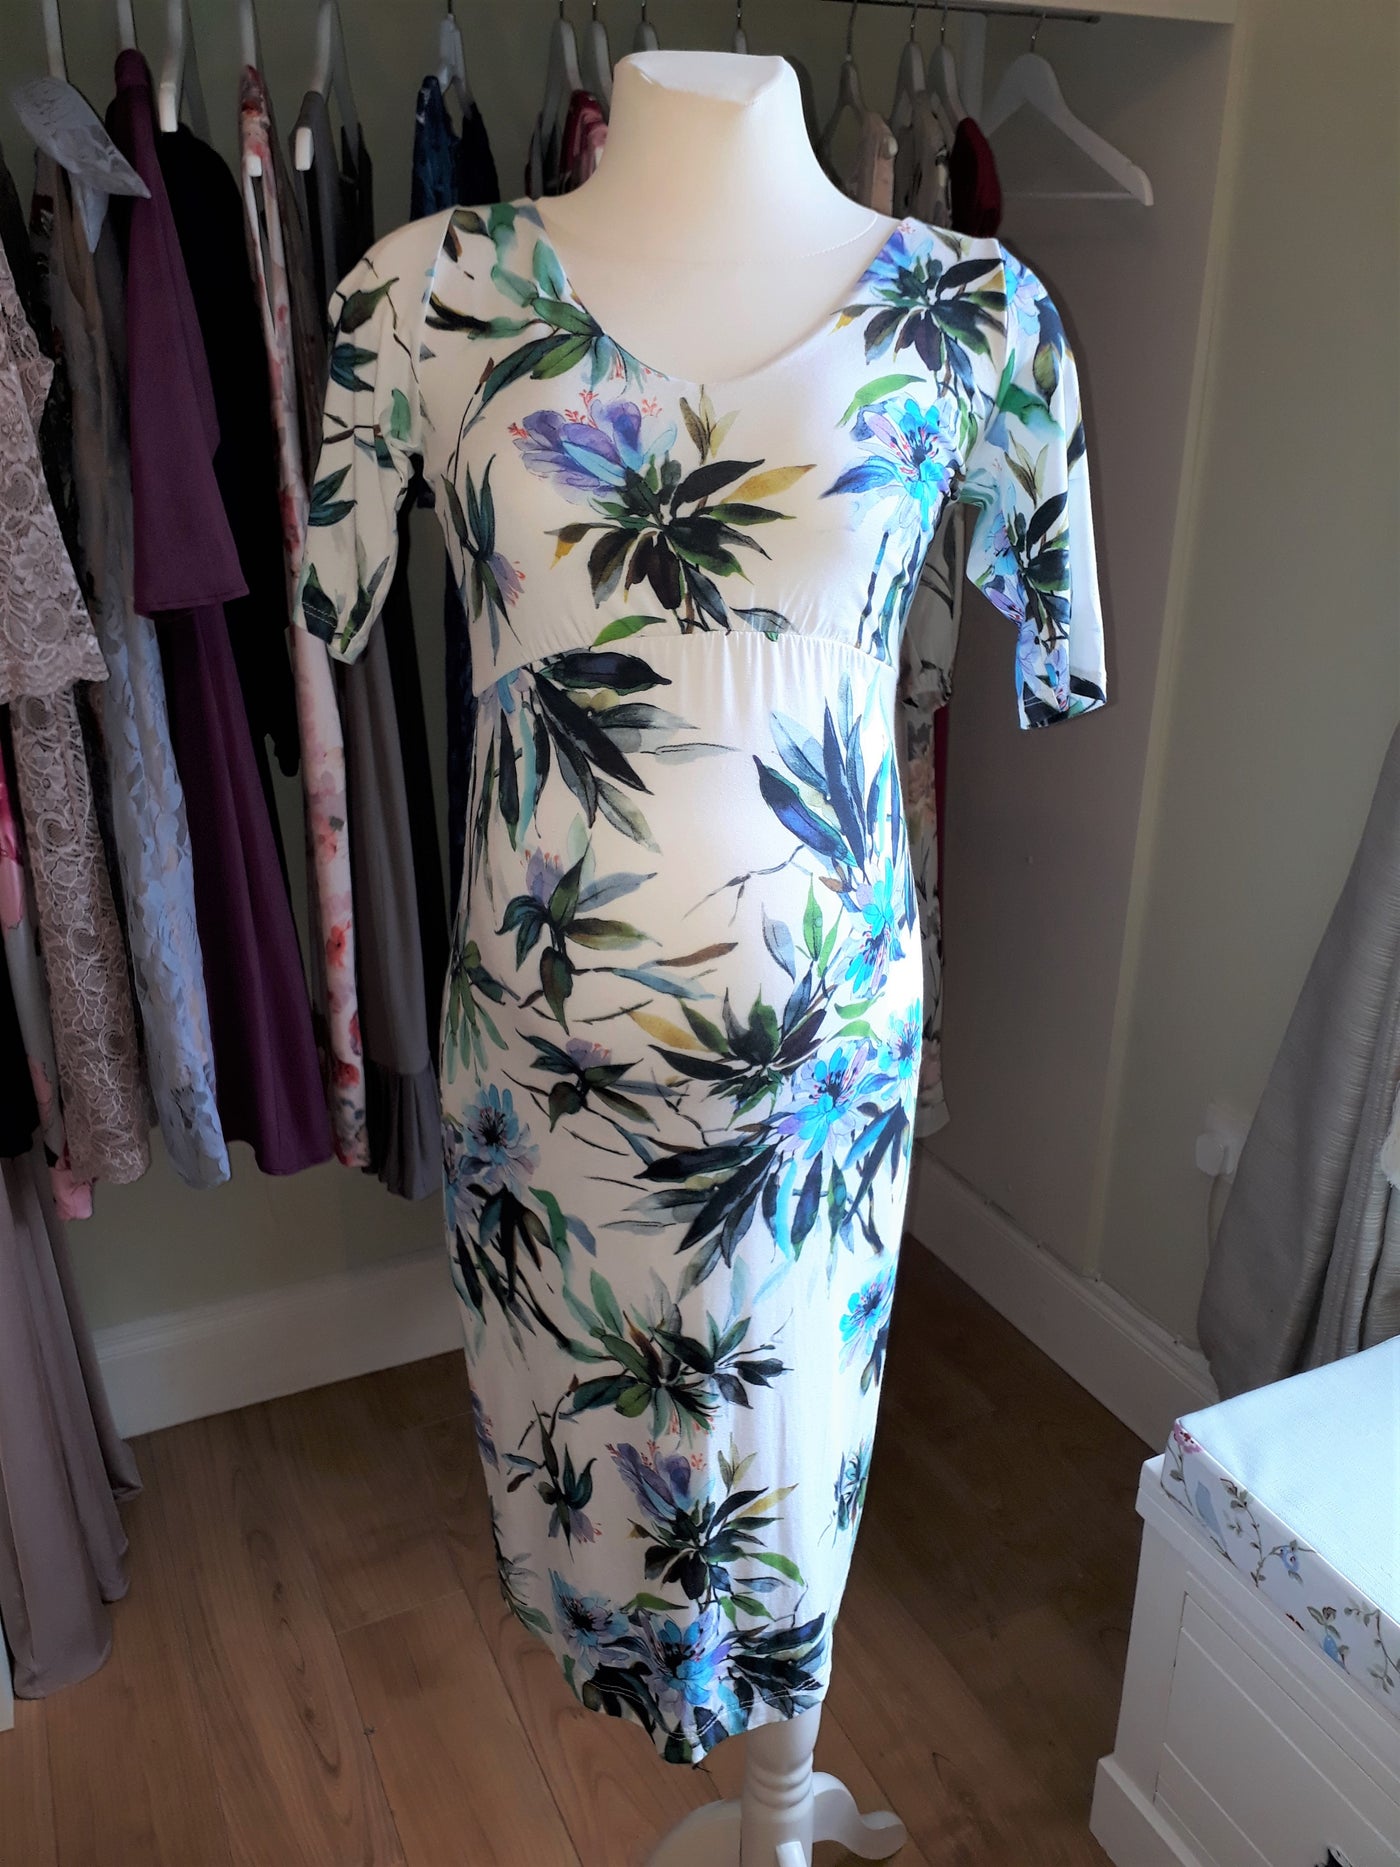 Tiffany Rose Tilly Shift Dress in Inky Tropics - Size 1 (UK 8/10)